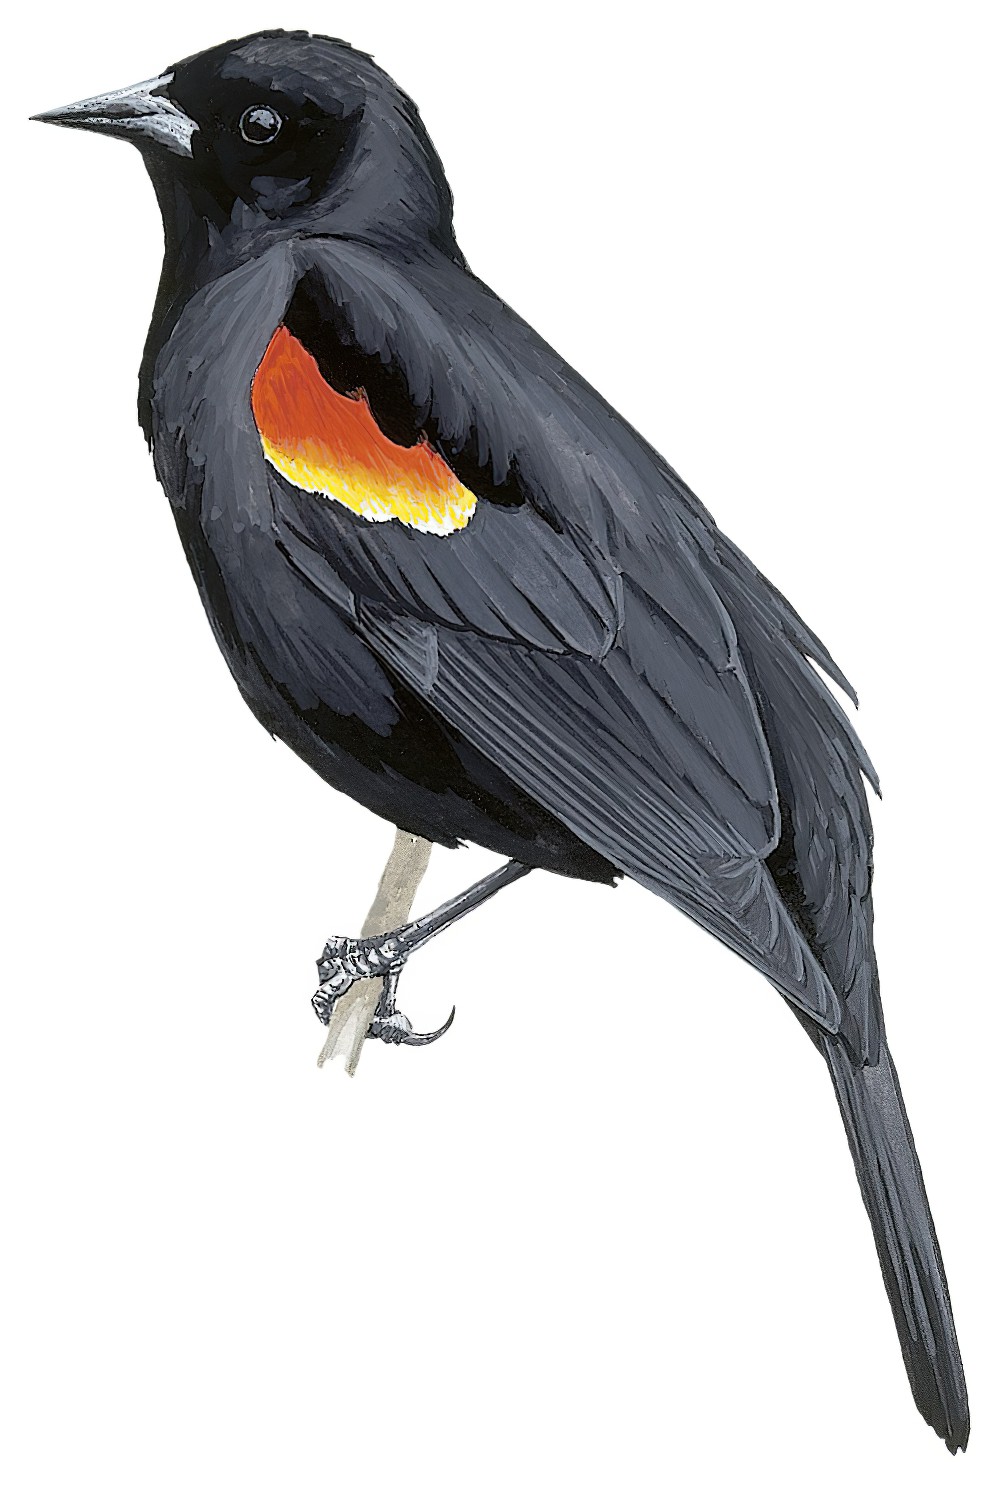 Red-winged Blackbird / Agelaius phoeniceus